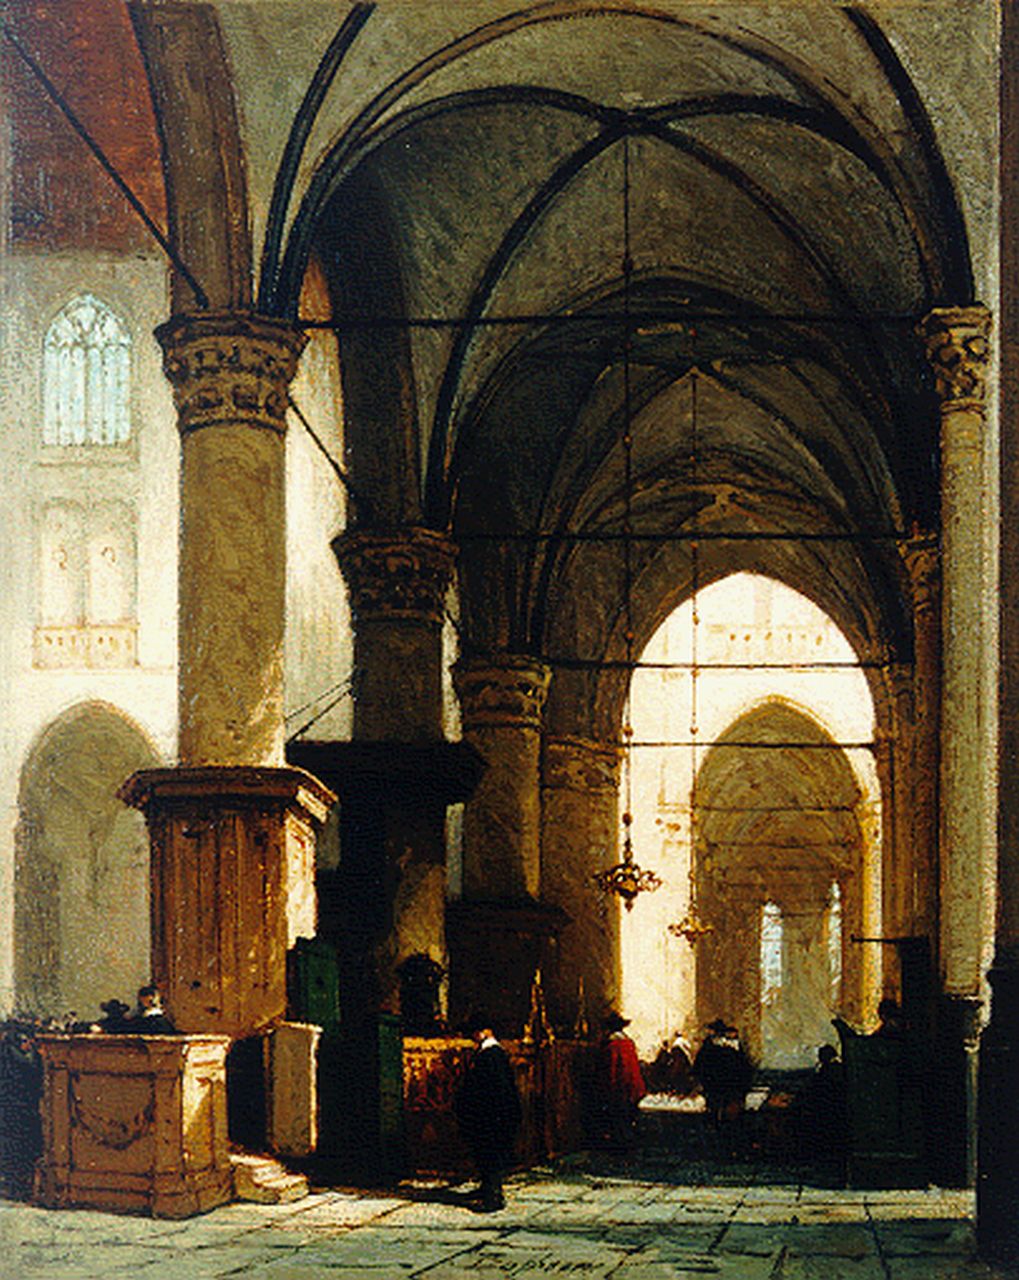 Bosboom J.  | Johannes Bosboom, Interieur van de Grote of St.-Laurenskerk in Alkmaar, olieverf op paneel 34,2 x 27,7 cm, gesigneerd middenonder en te dateren 1865-1870